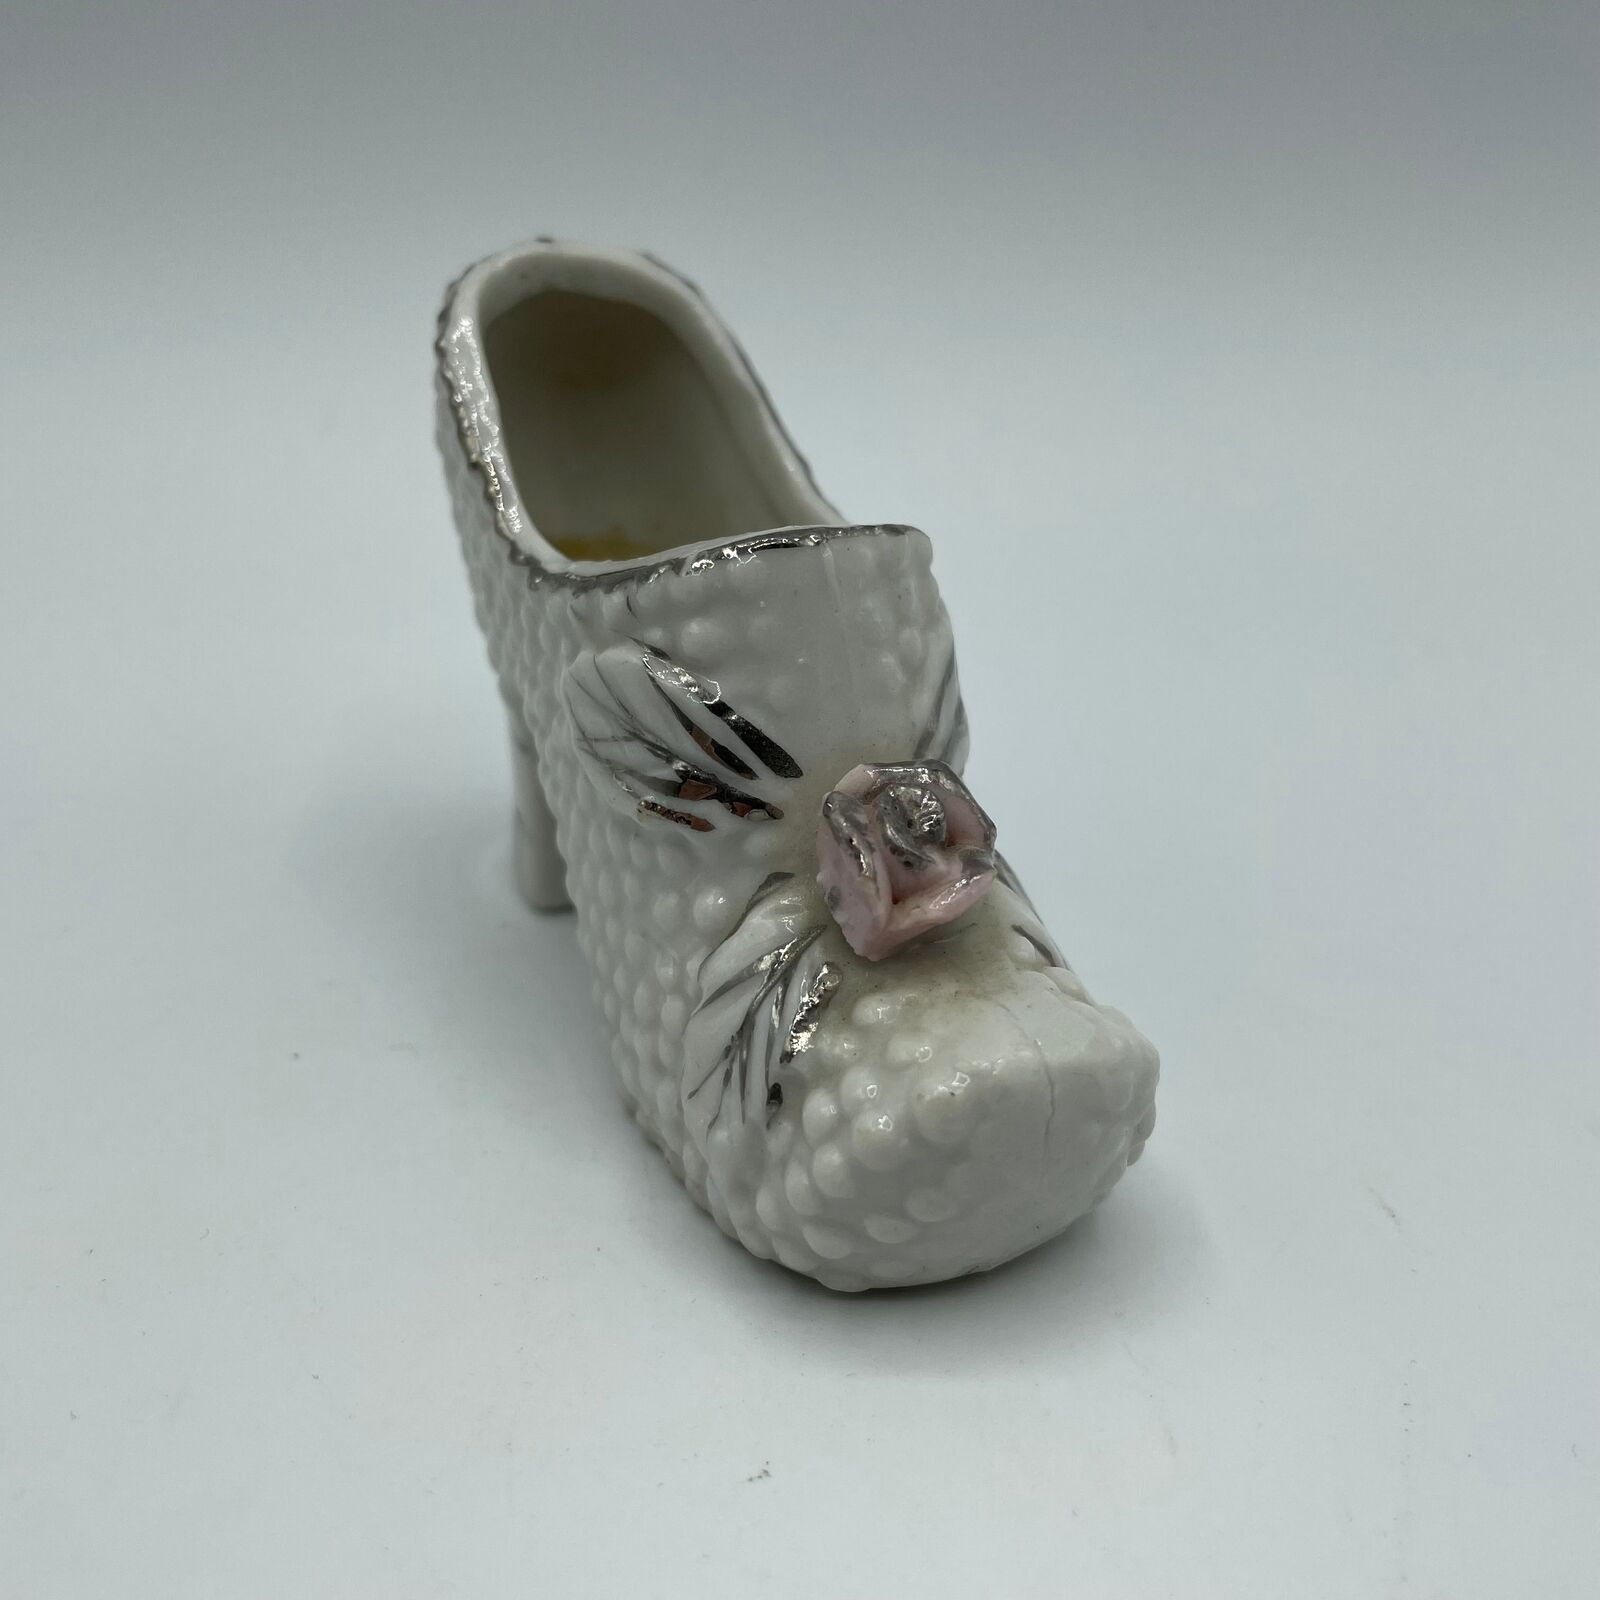 Vintage White High Heel Porcelain Shoe Figurine Pink Rose With Silver Trim